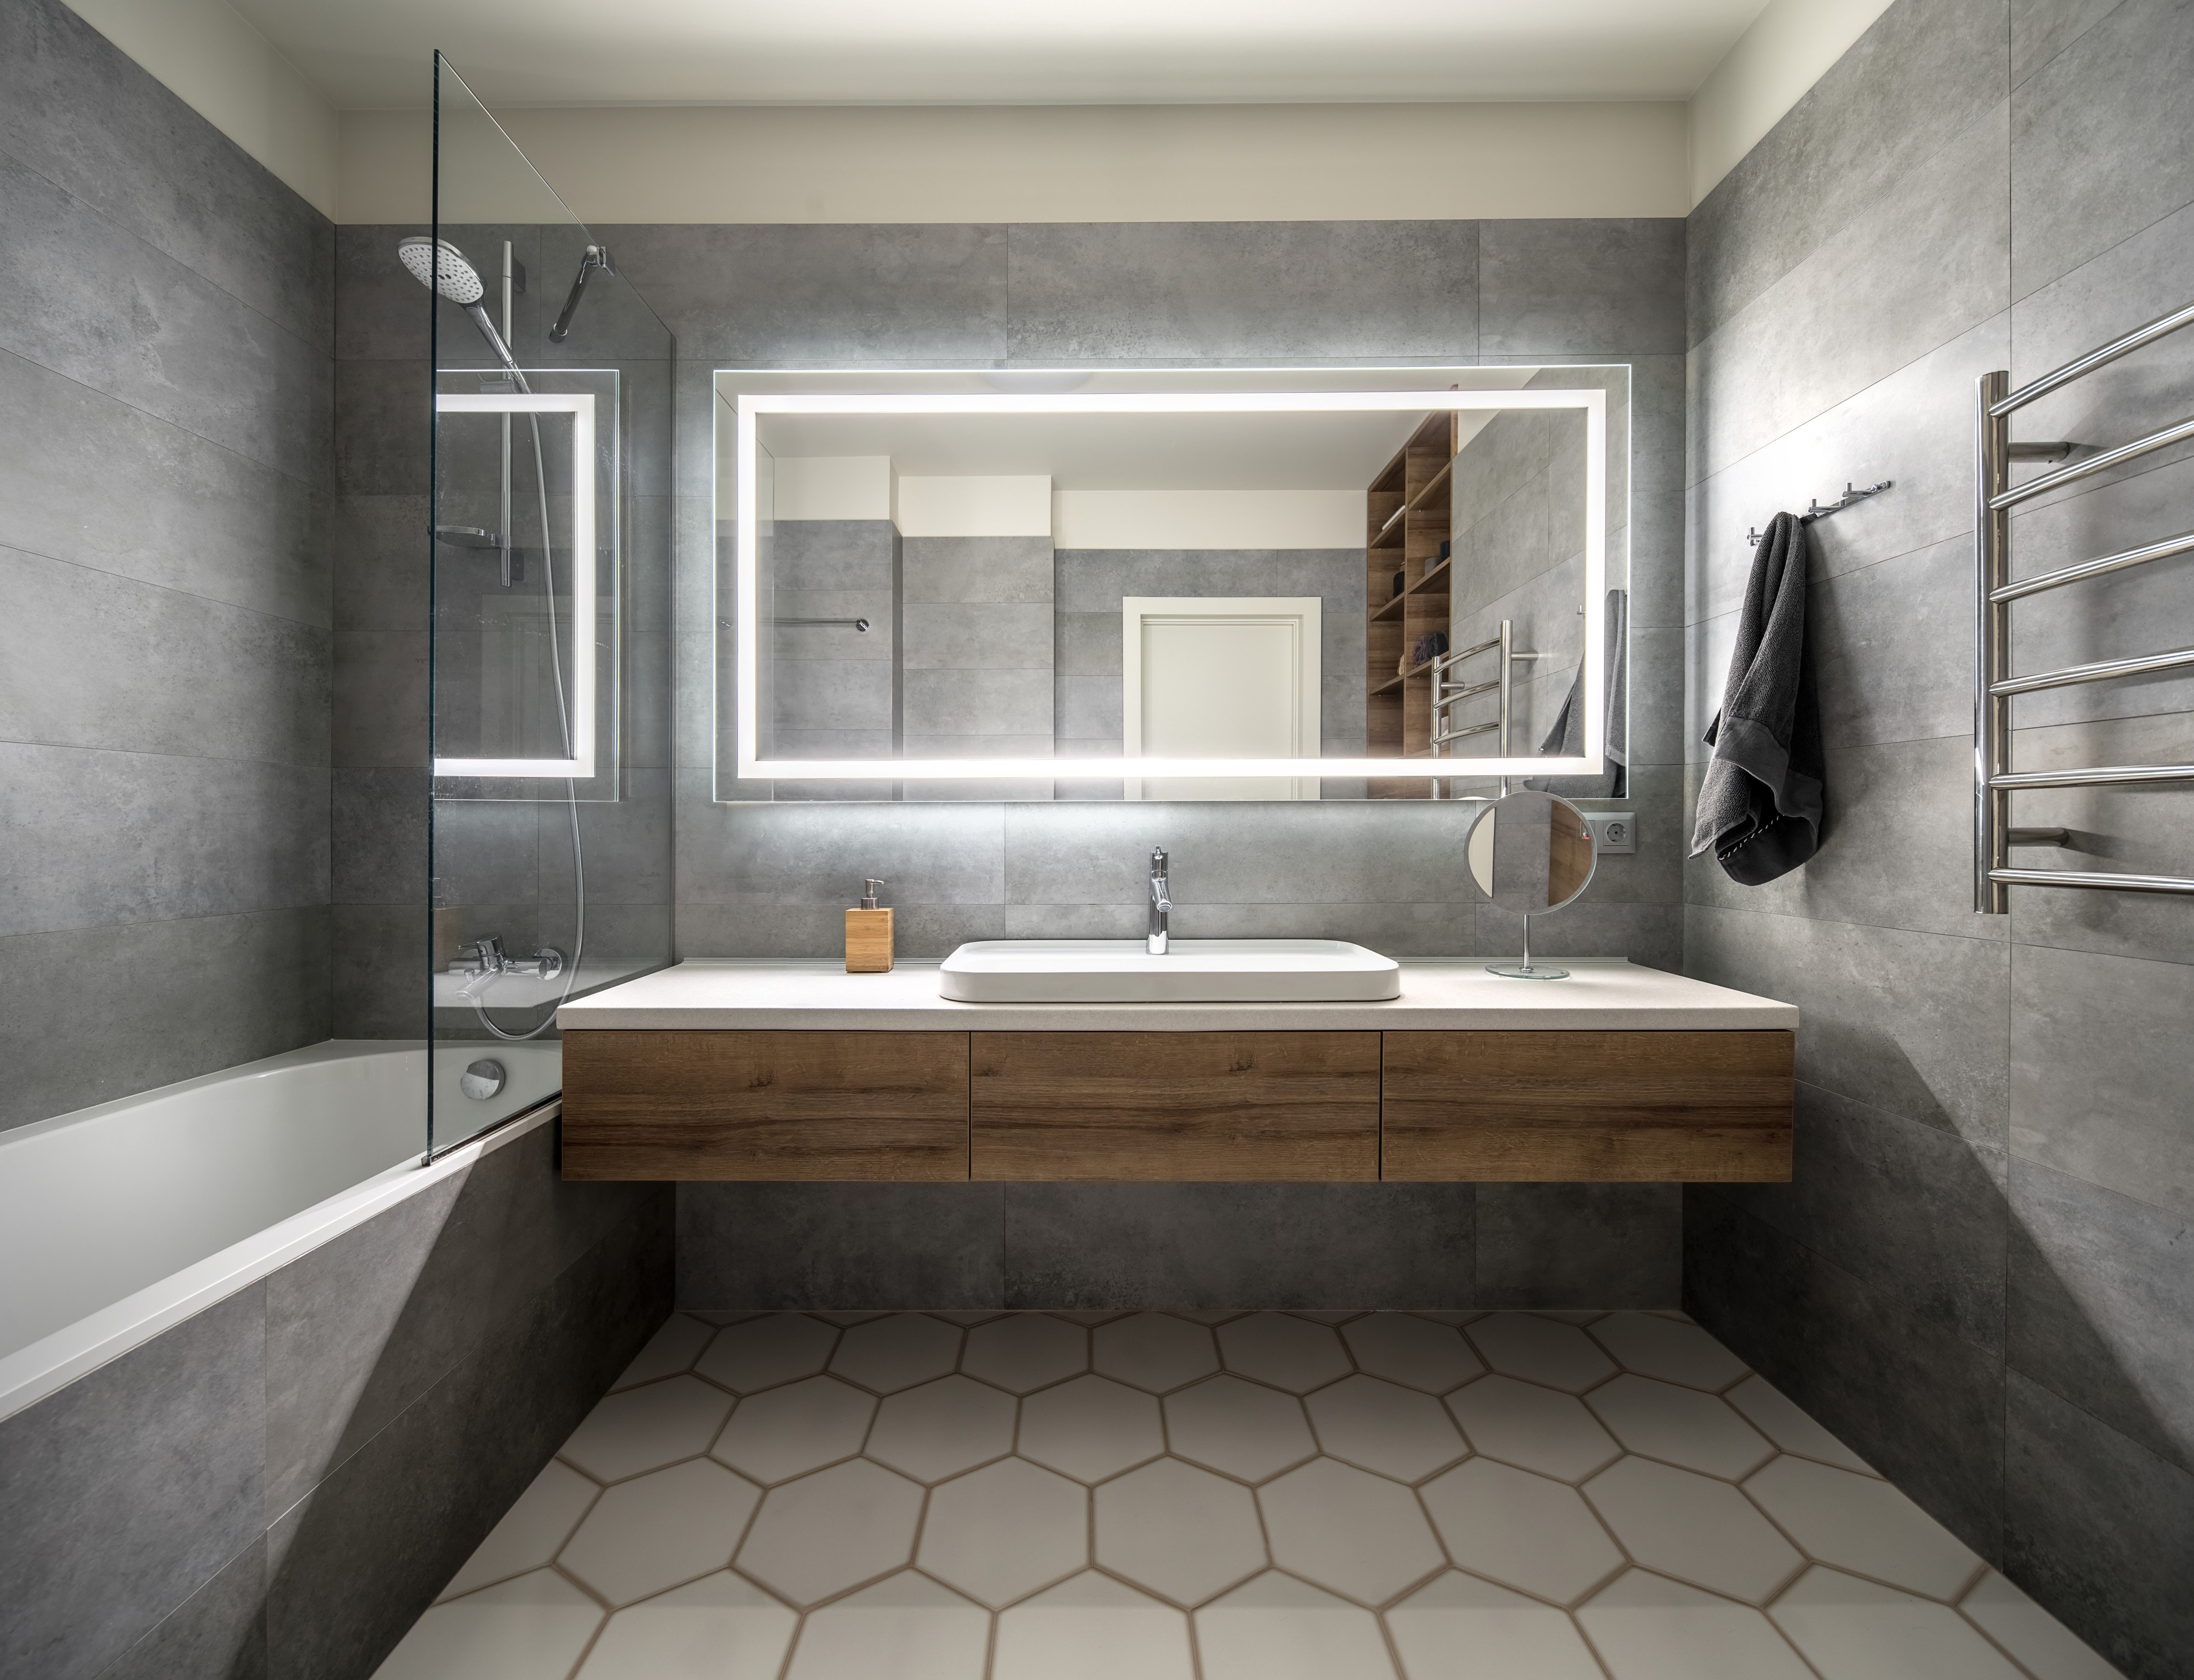 Top Bathroom Design Trends 2019 Design Ideas for Bathrooms